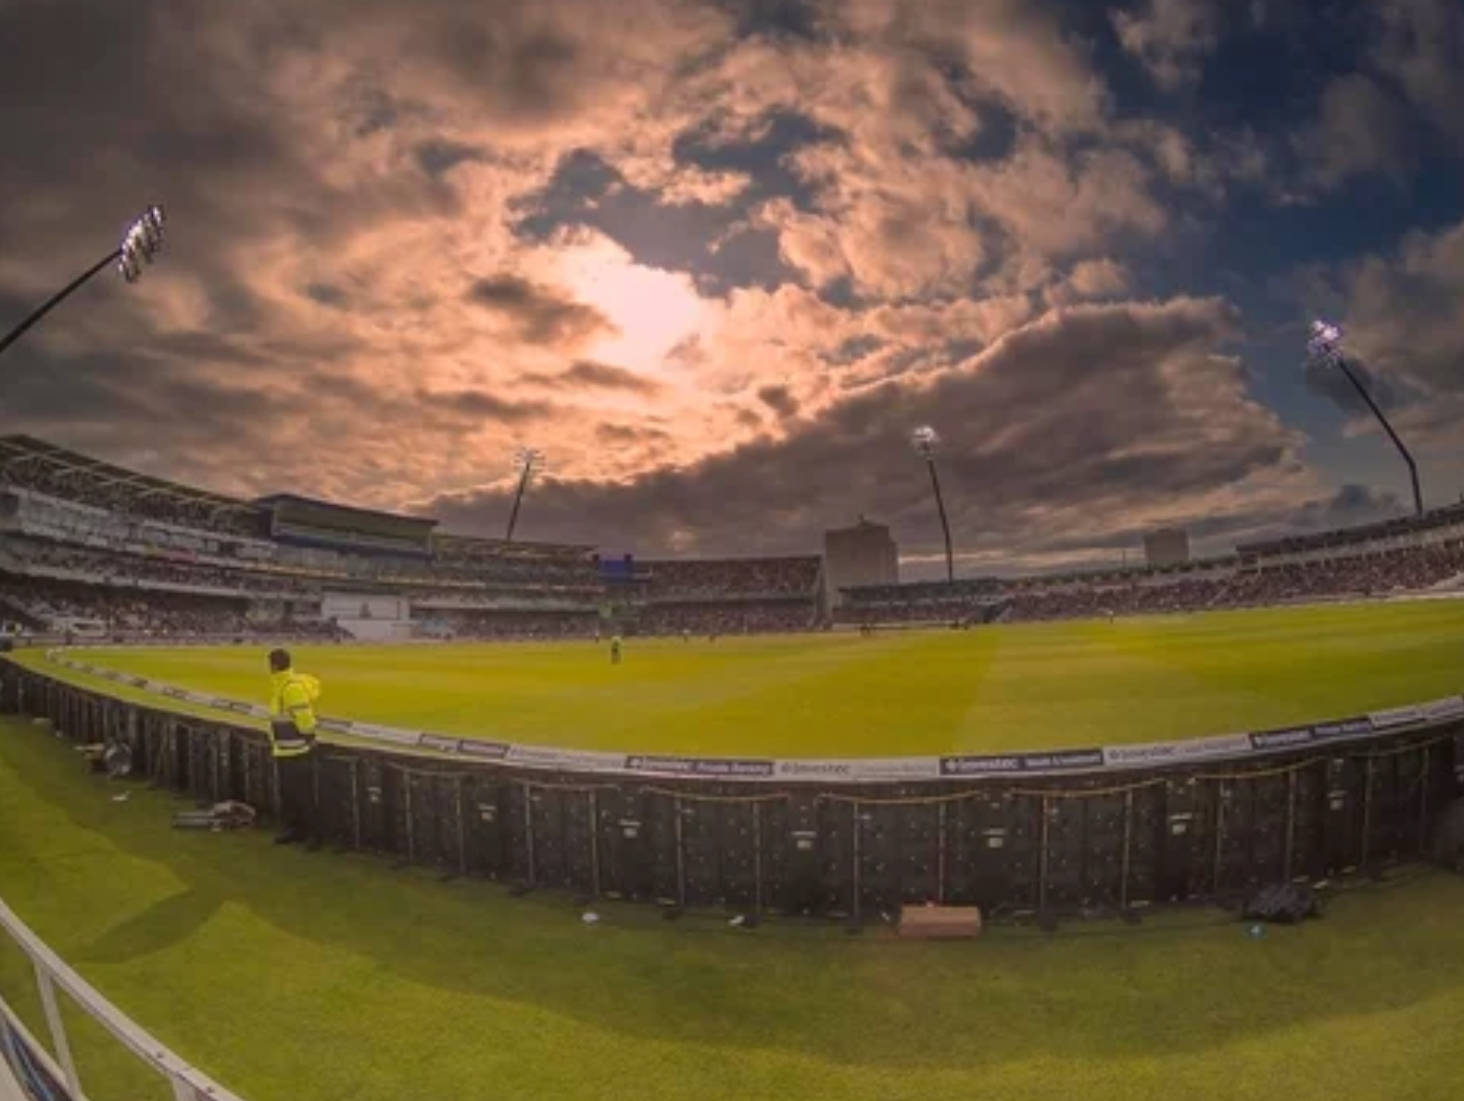 Sunset Cricket Ground